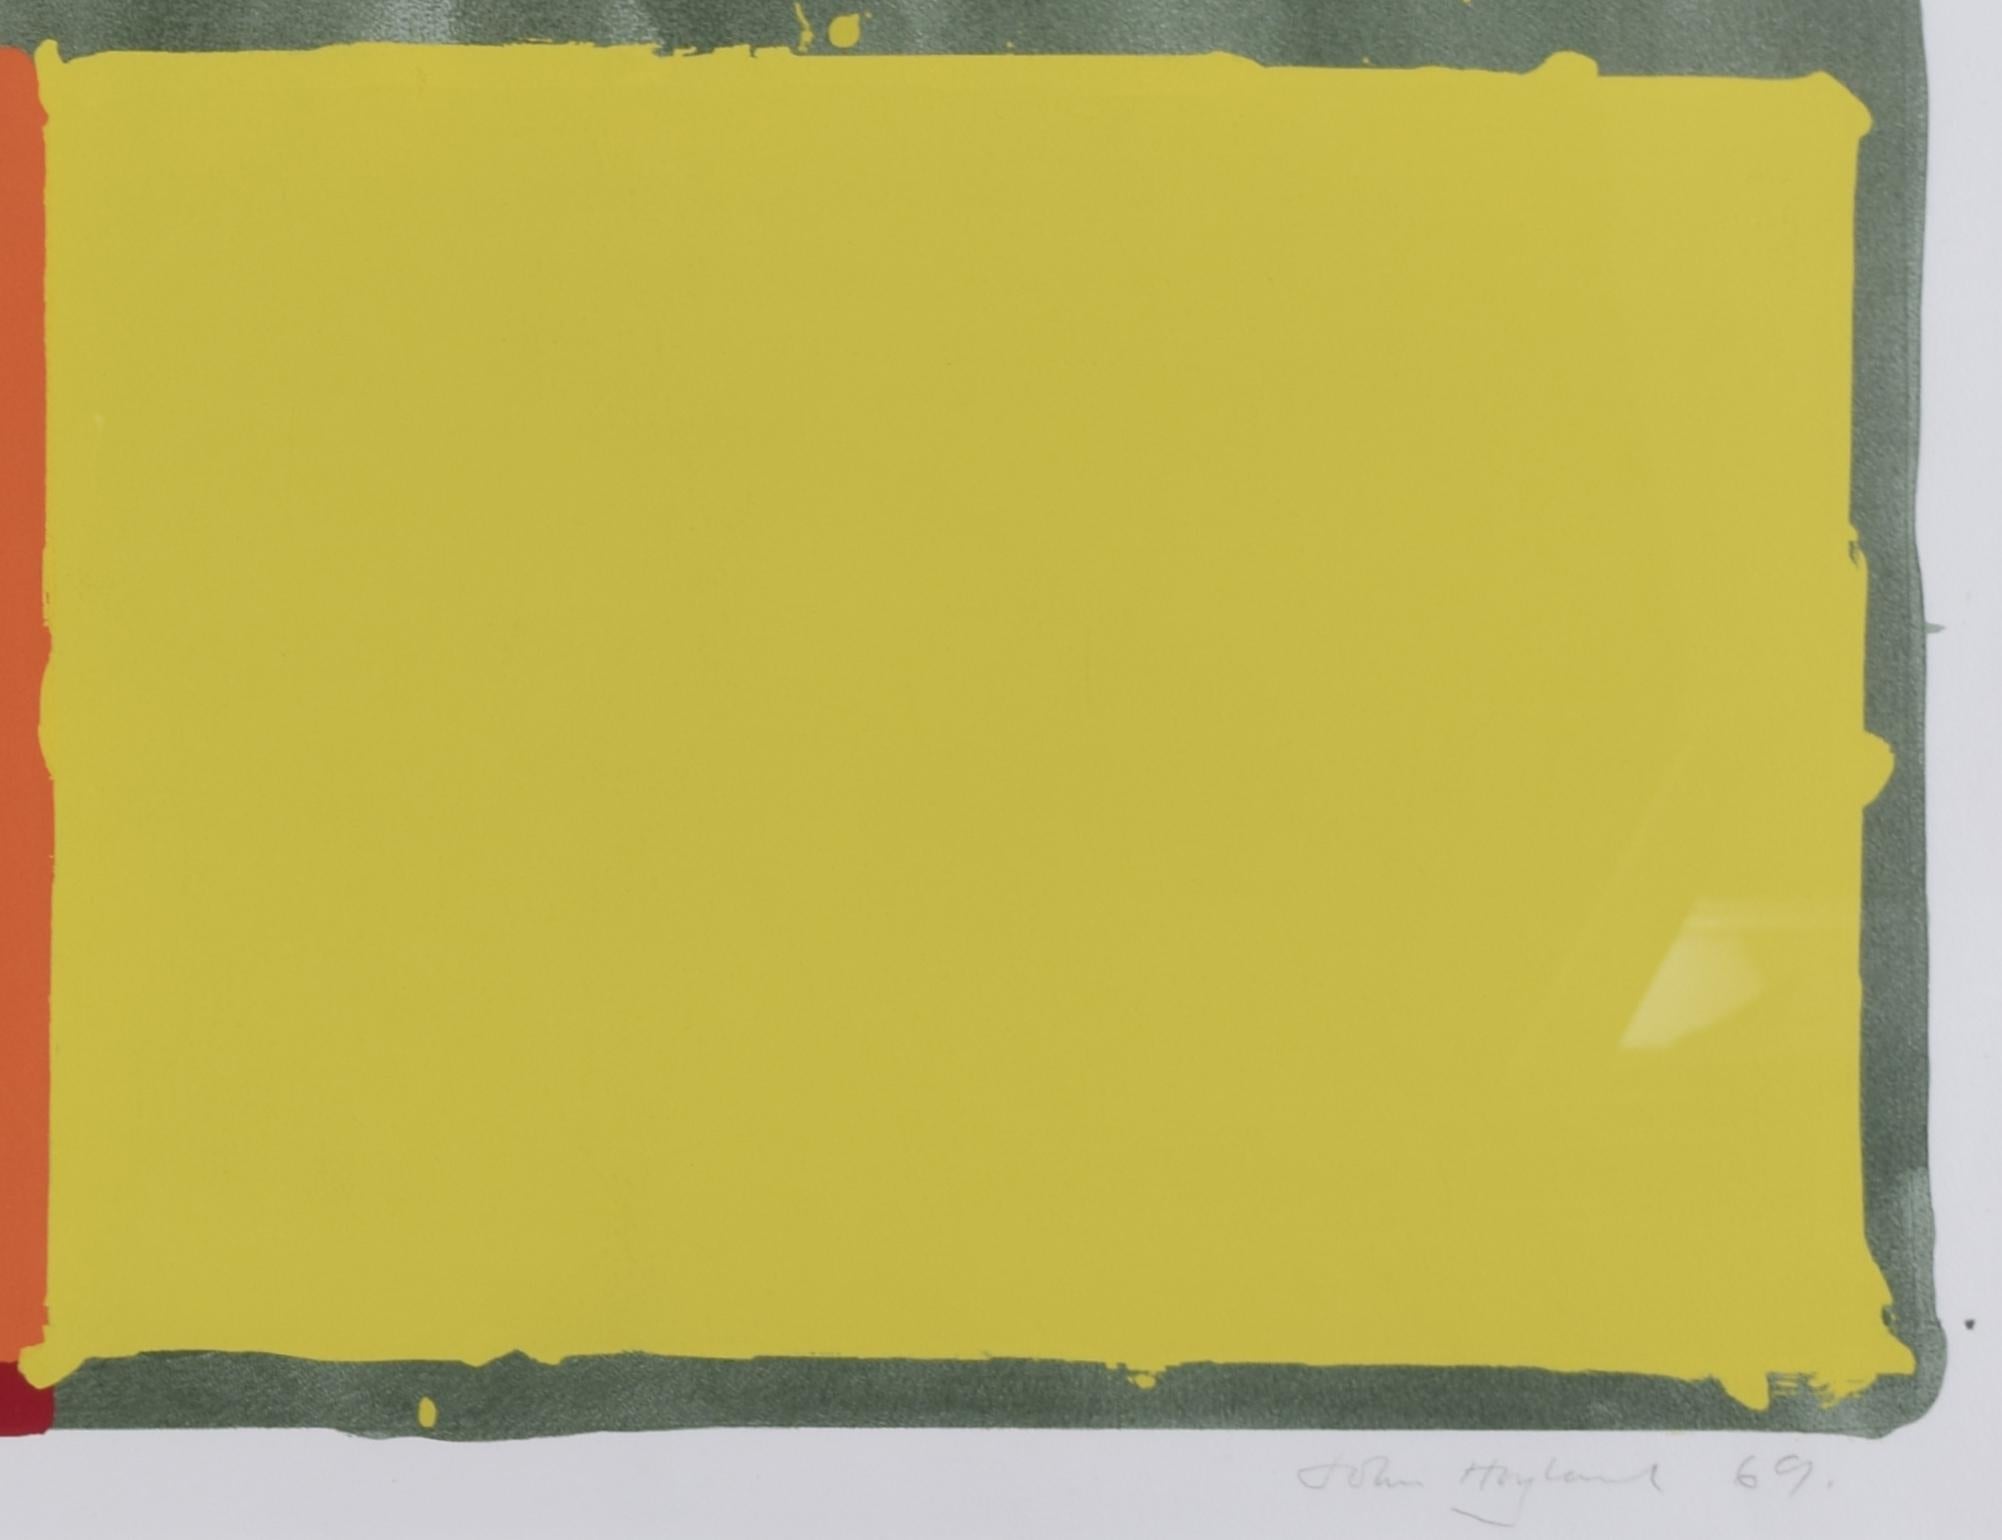 Yellows abstract screenprint by John Hoyland 1960s Modern British Art For Sale 2